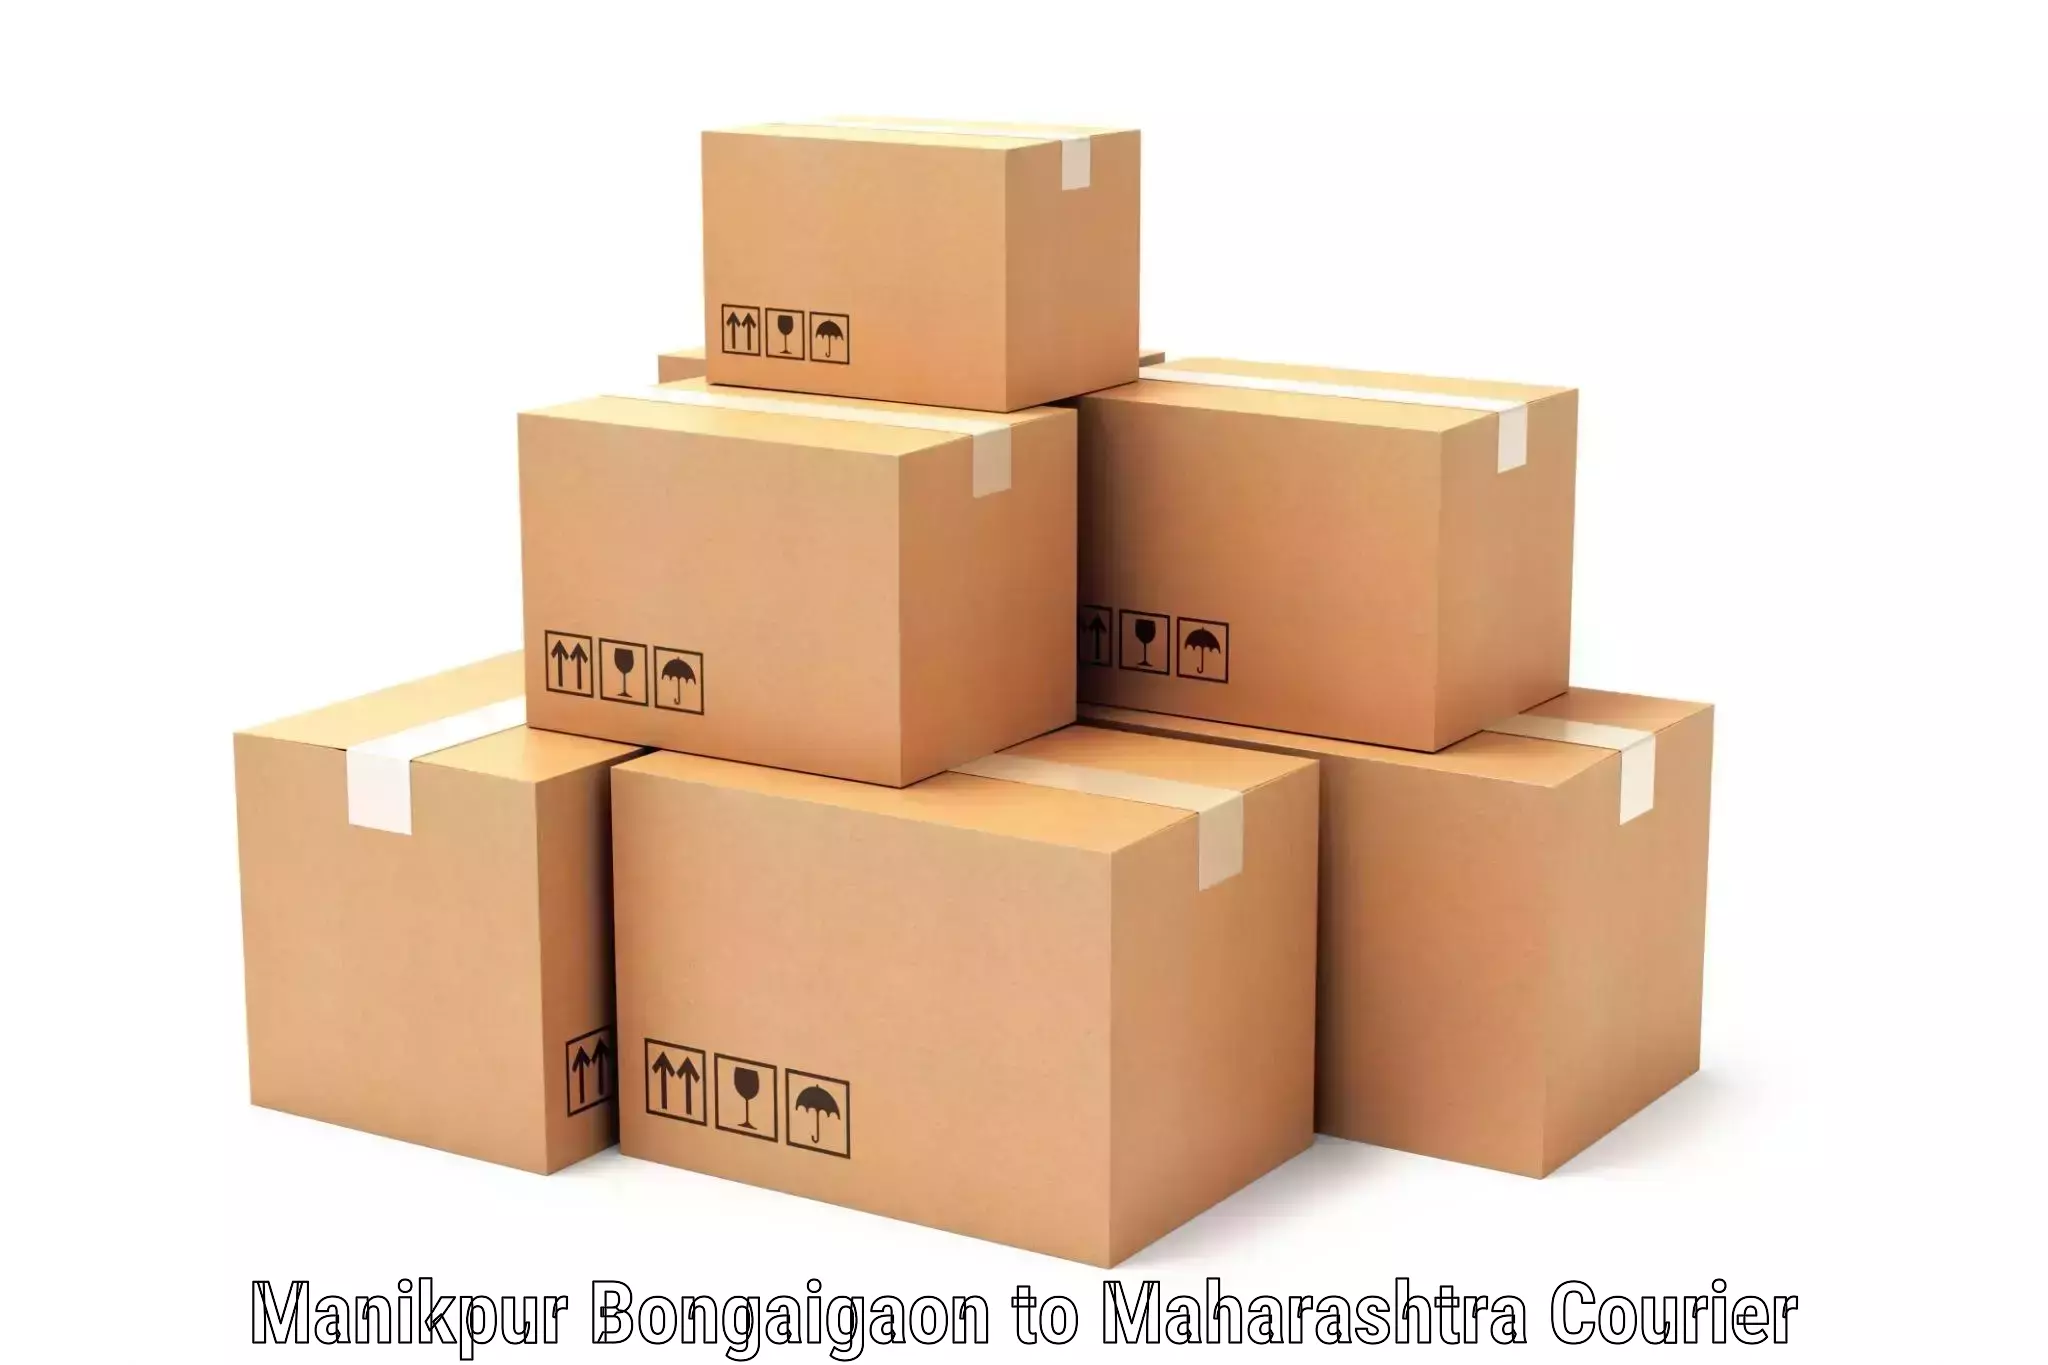 High-capacity parcel service Manikpur Bongaigaon to Ambajogai